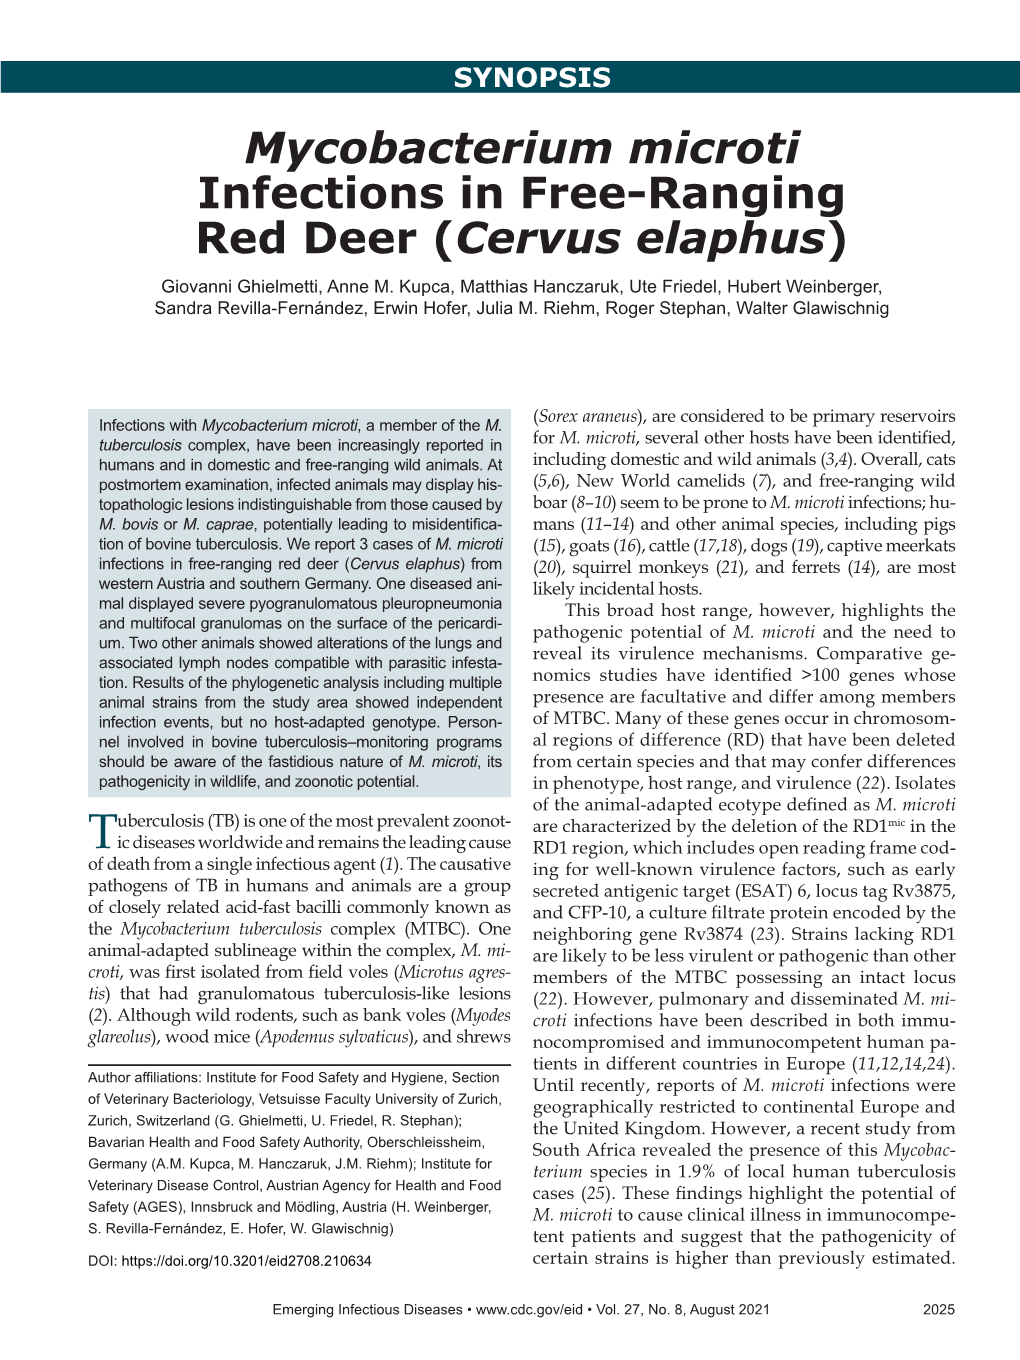 Mycobacterium Microti Infections in Free-Ranging Red Deer (Cervus Elaphus) Giovanni Ghielmetti, Anne M